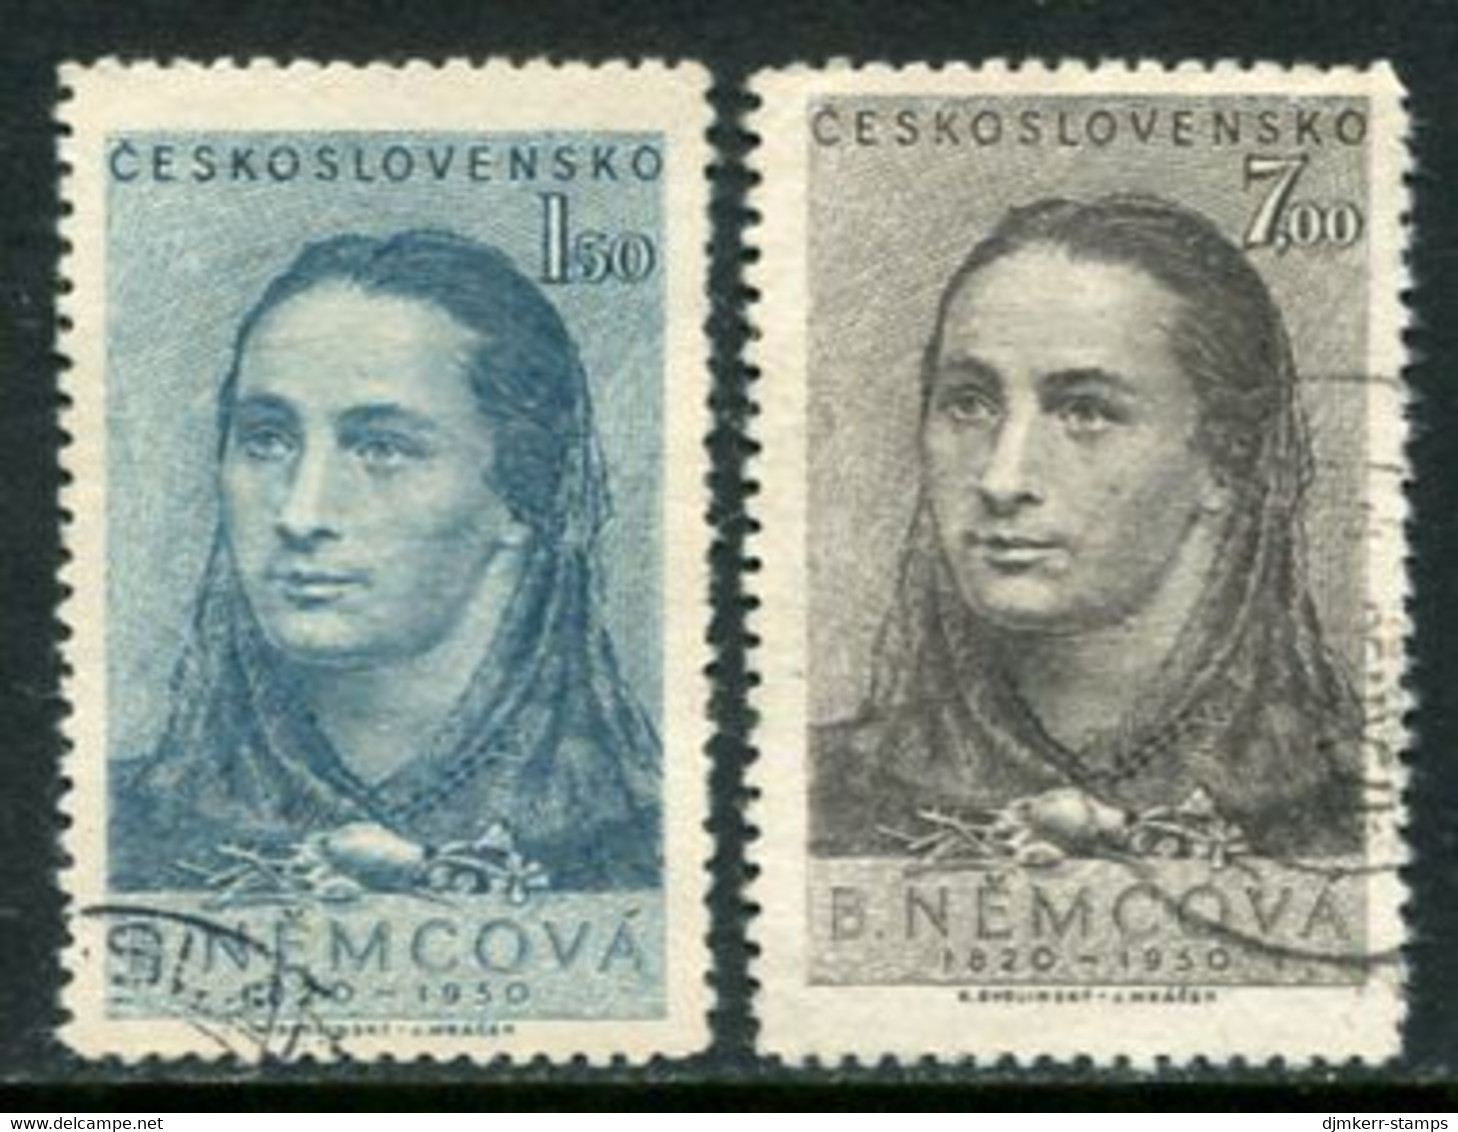 CZECHOSLOVAKIA 1950 Bozena Nemcova Used.  Michel 620-21 - Used Stamps